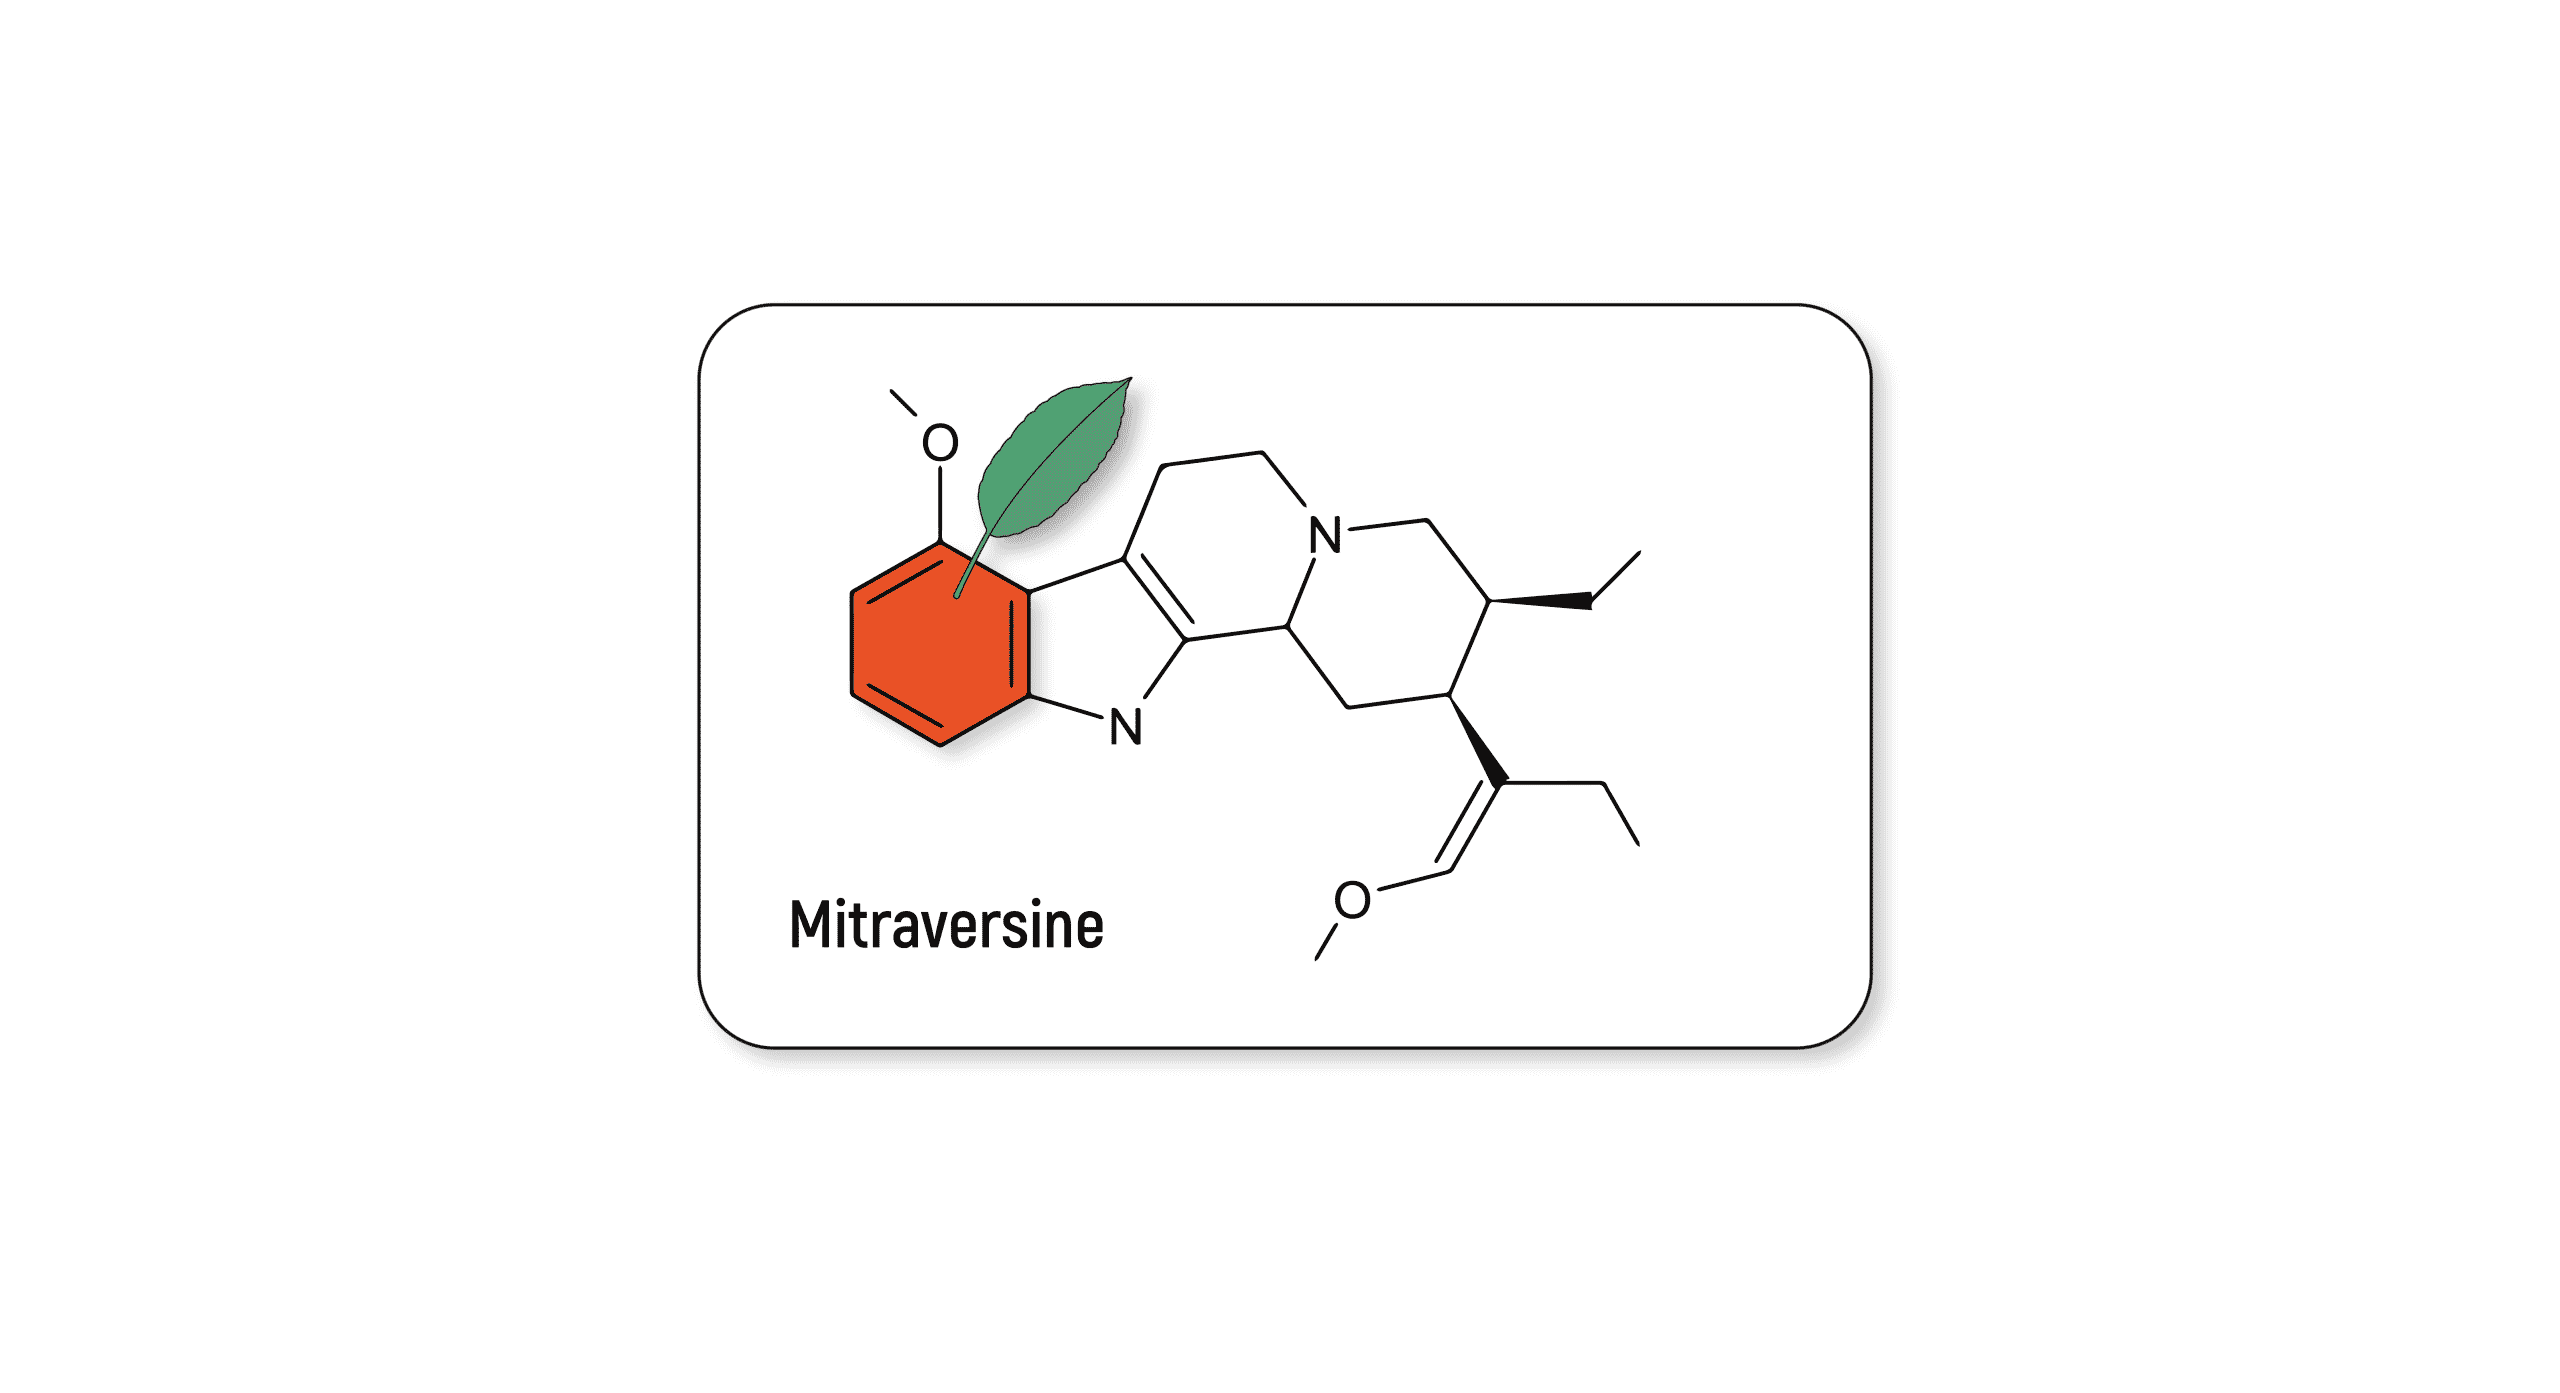 Mitraversine: What We Know About This Elusive Kratom Alkaloid